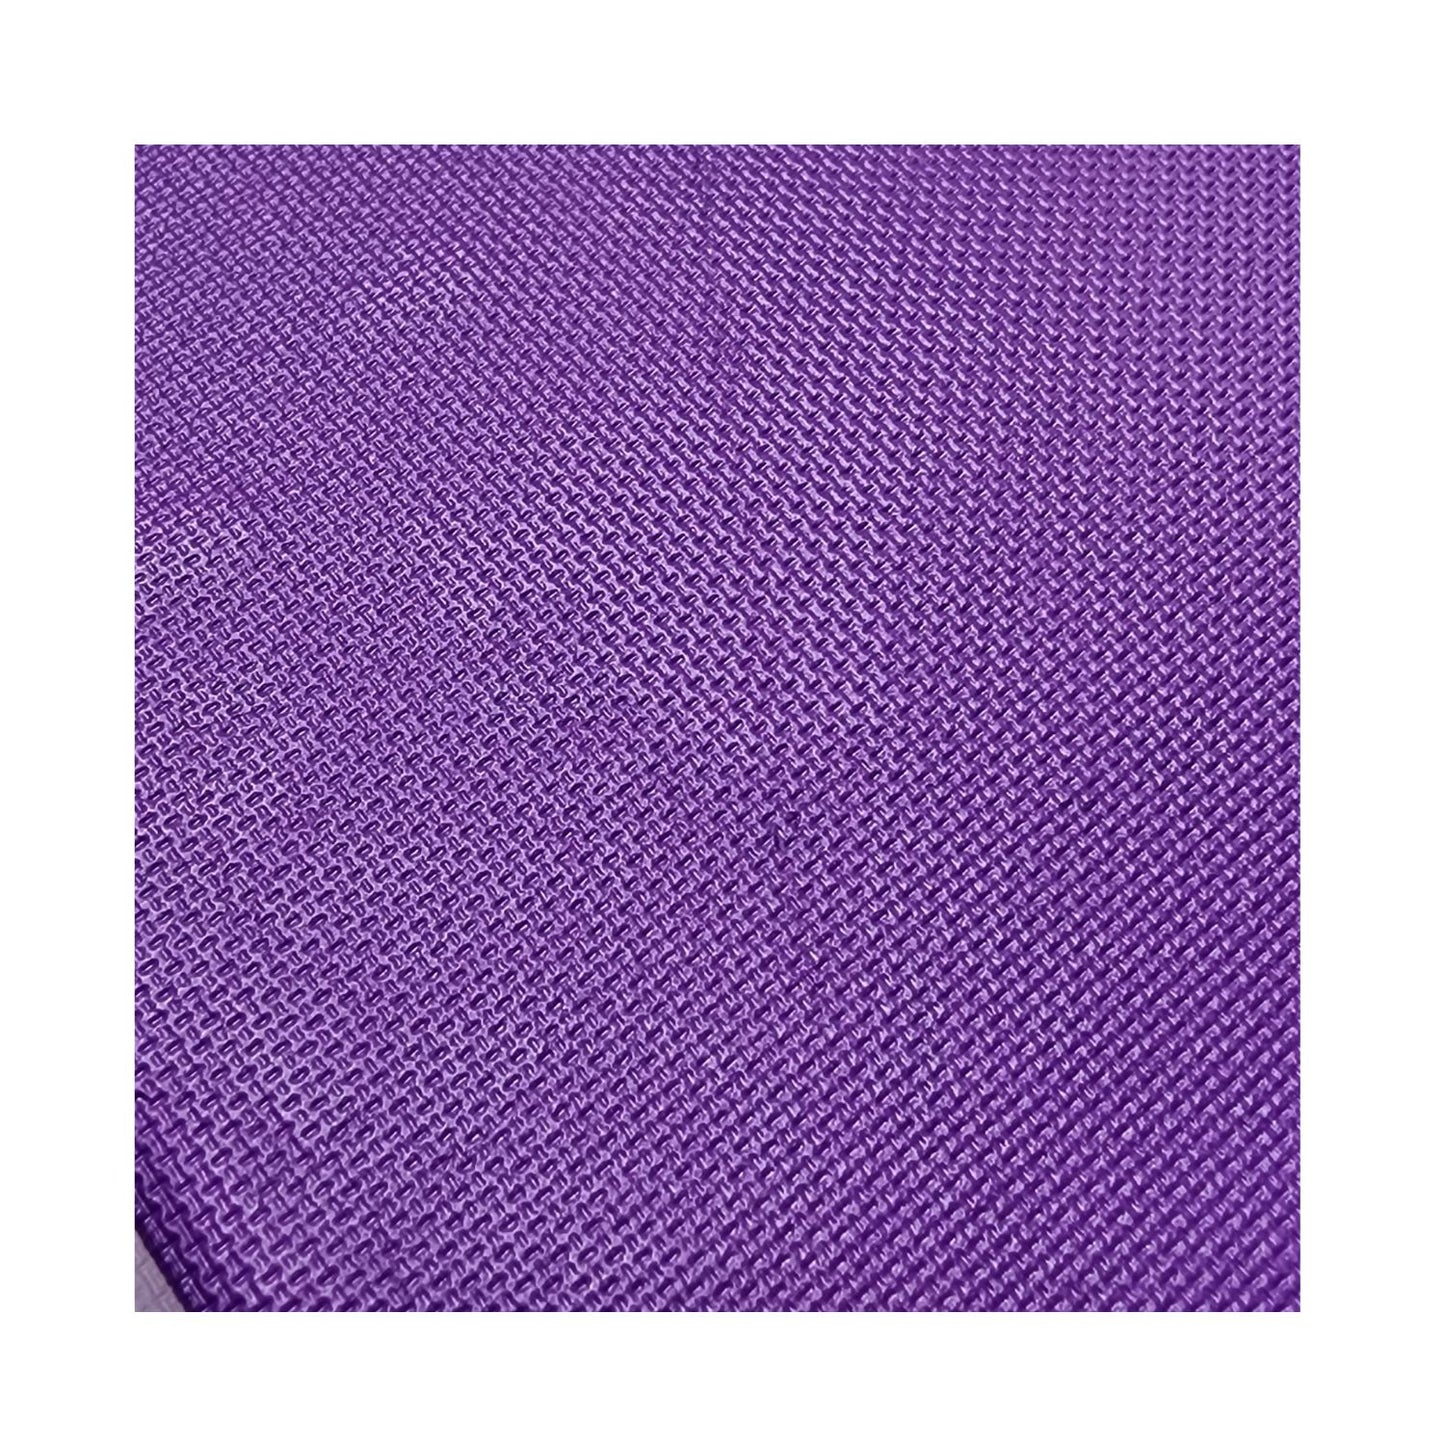 Wisteria Purple-REGULAR